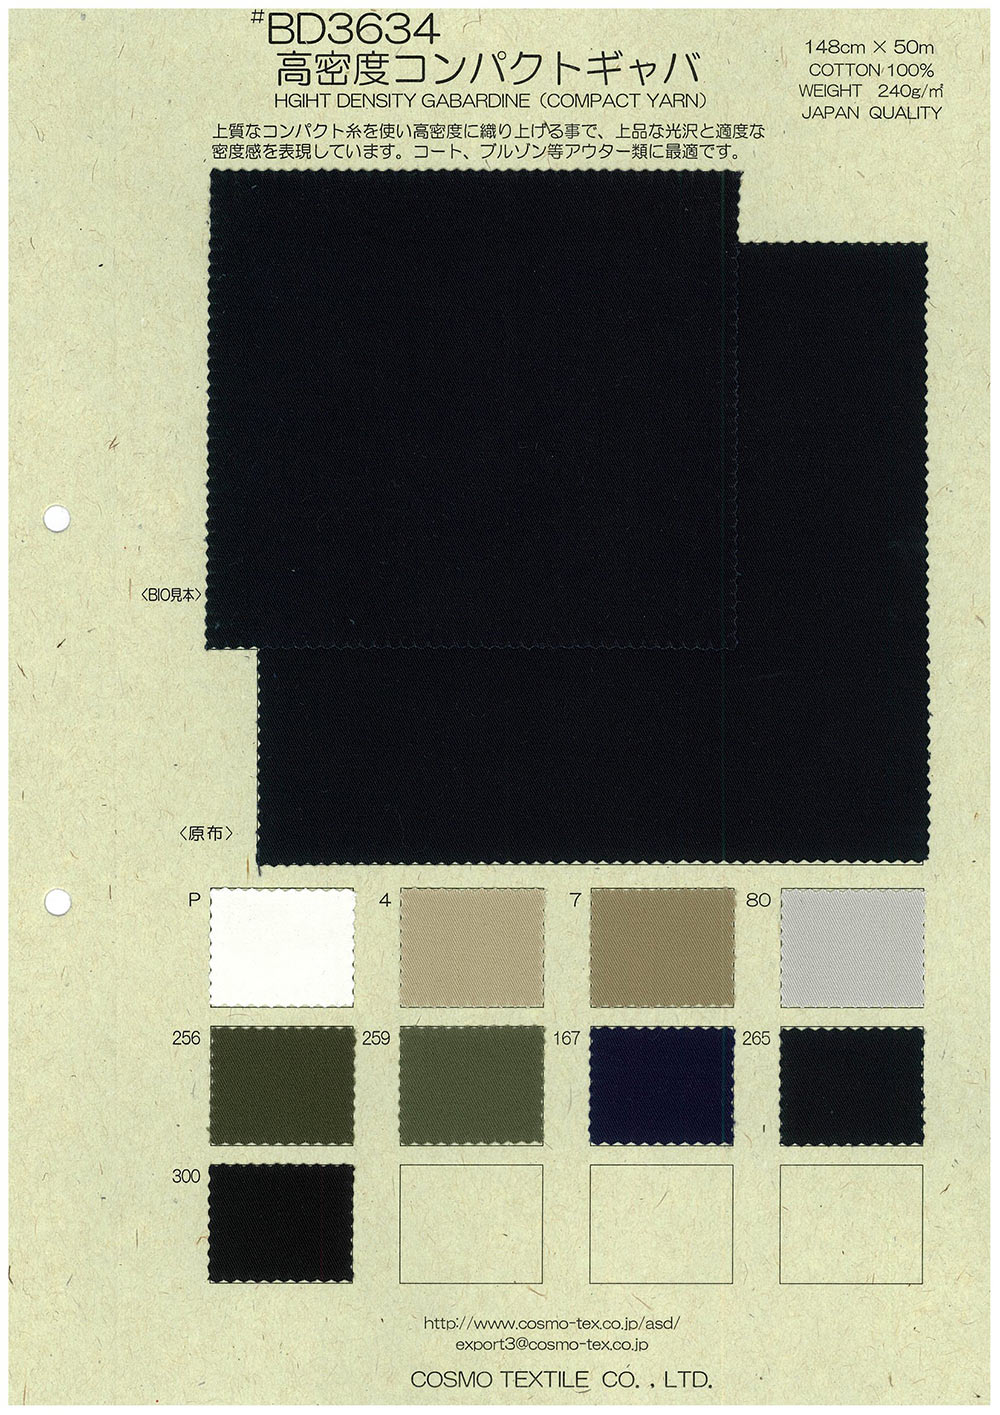 BD3634 Compact Gabardine[Textile / Fabric] COSMO TEXTILE